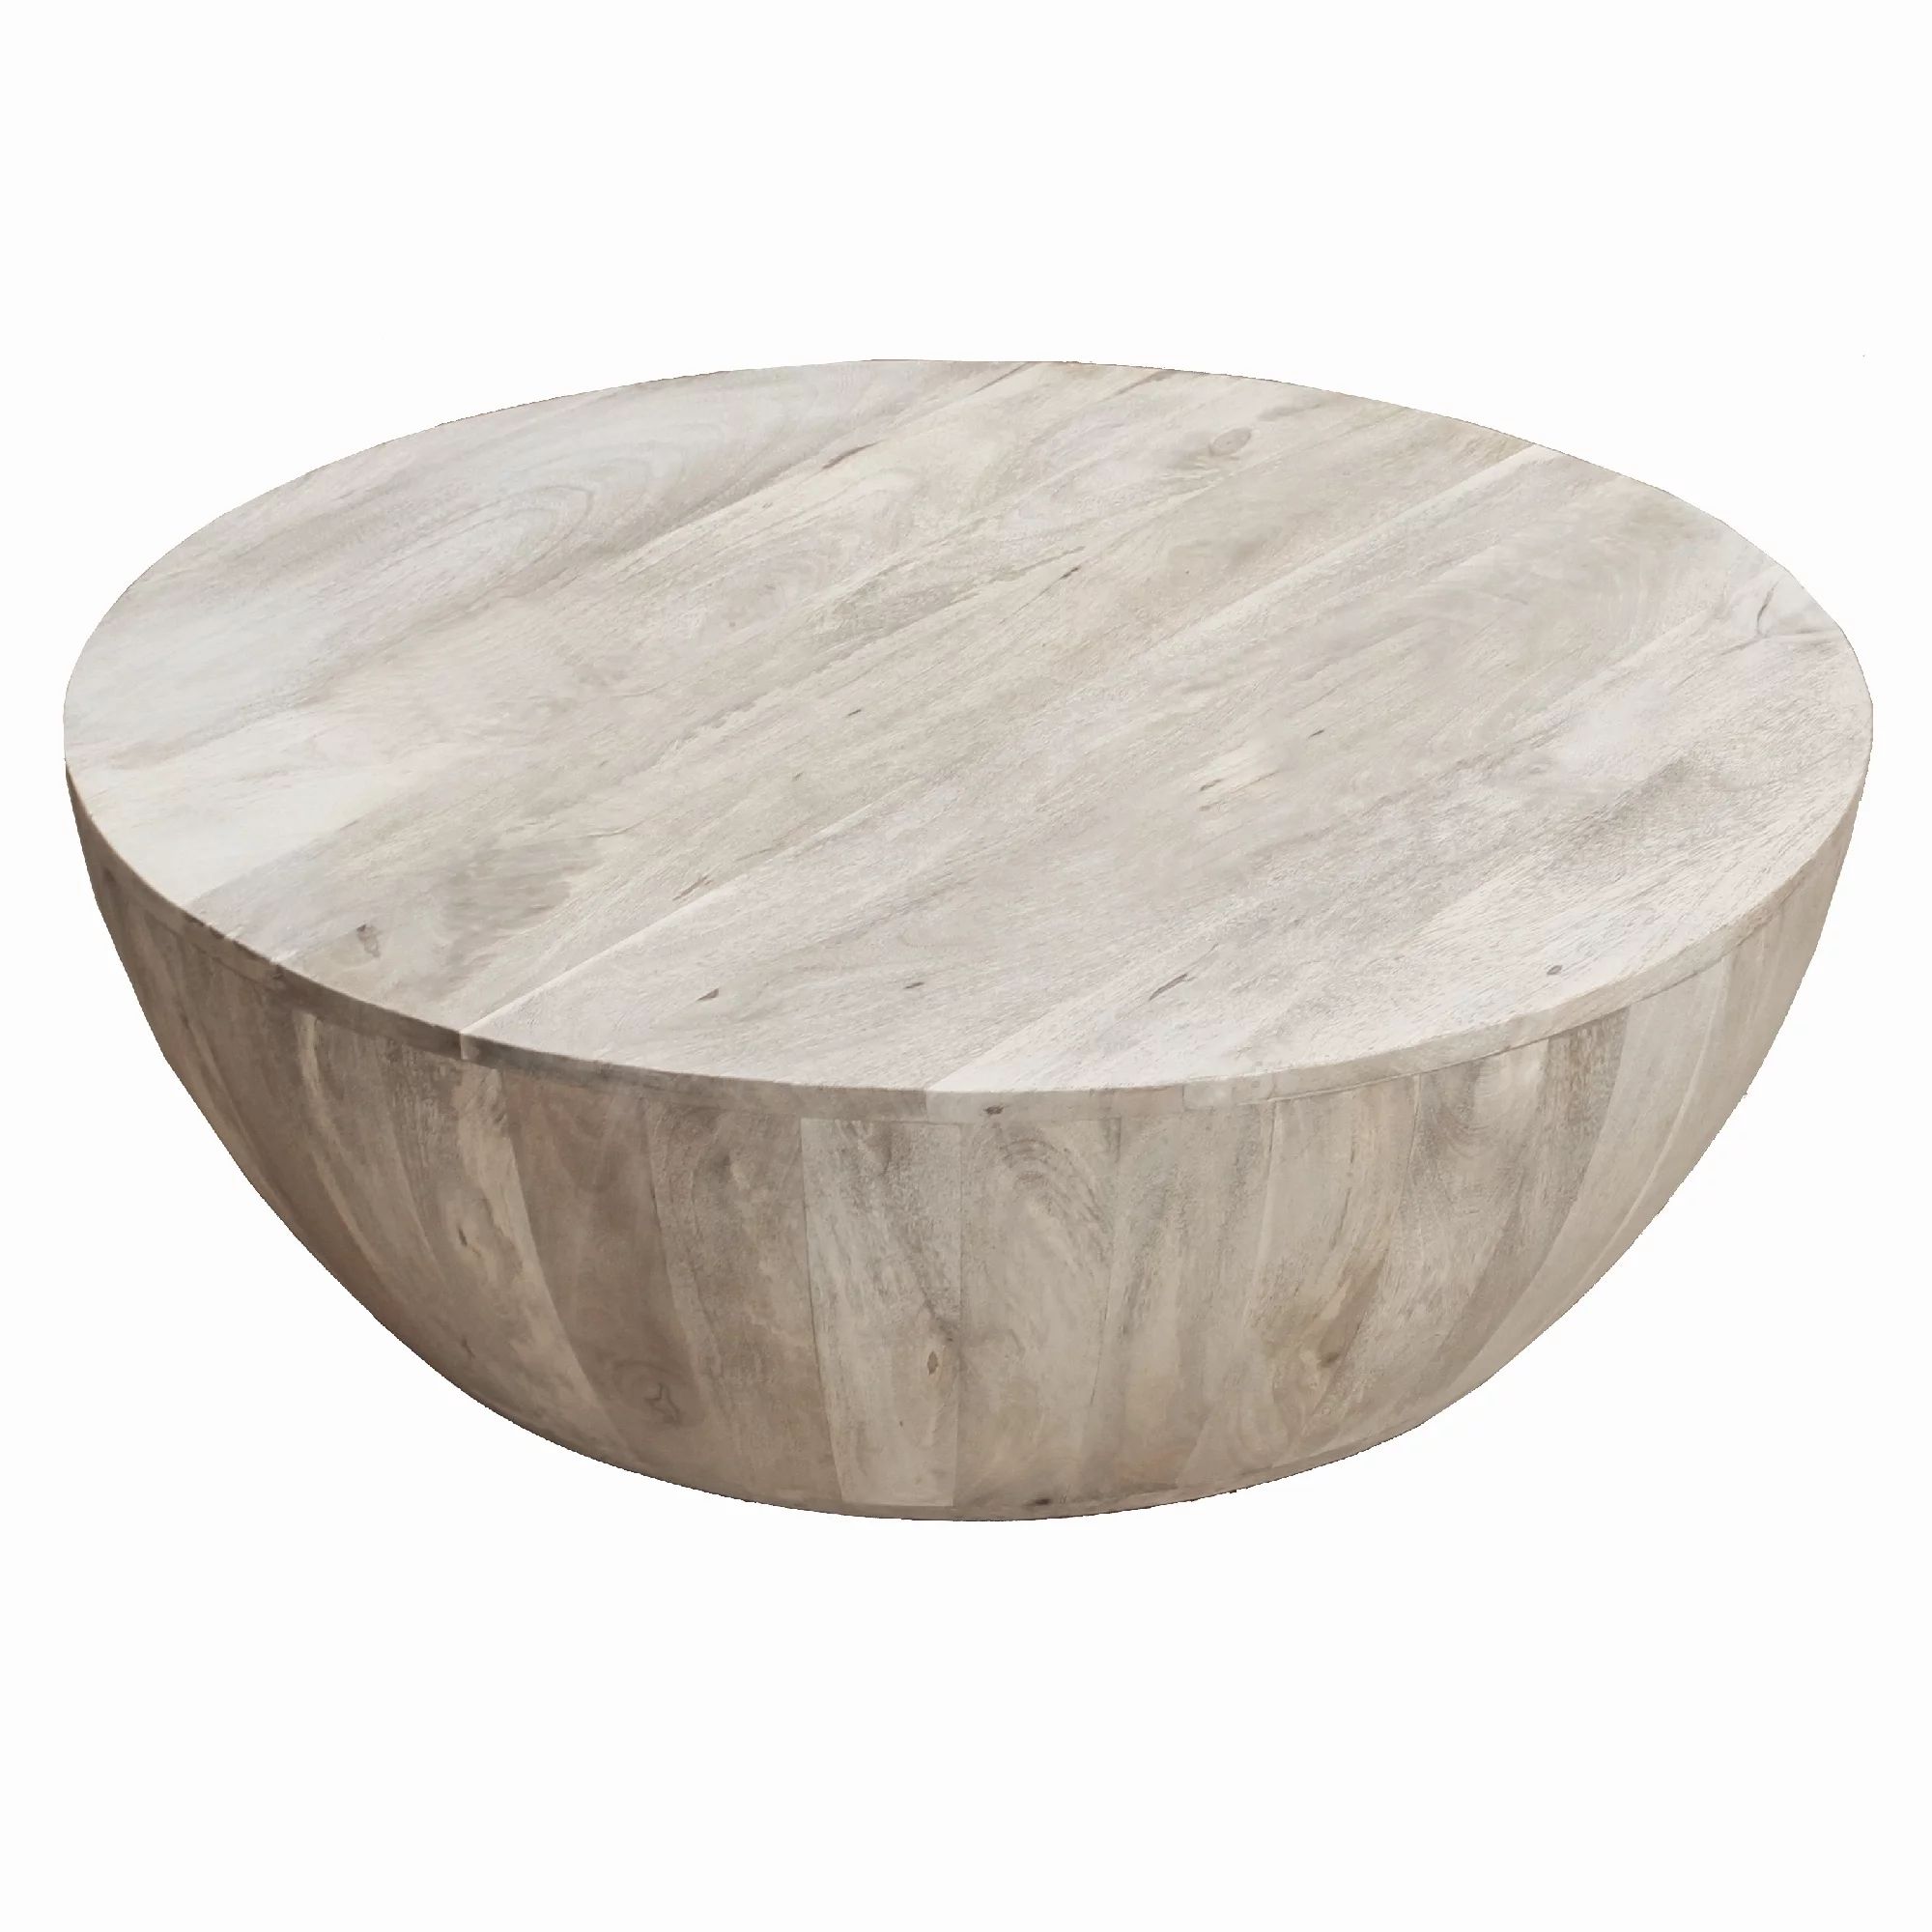 12 Inch Round Mango Wood Coffee Table, Subtle Grains, Distressed White | Walmart (US)